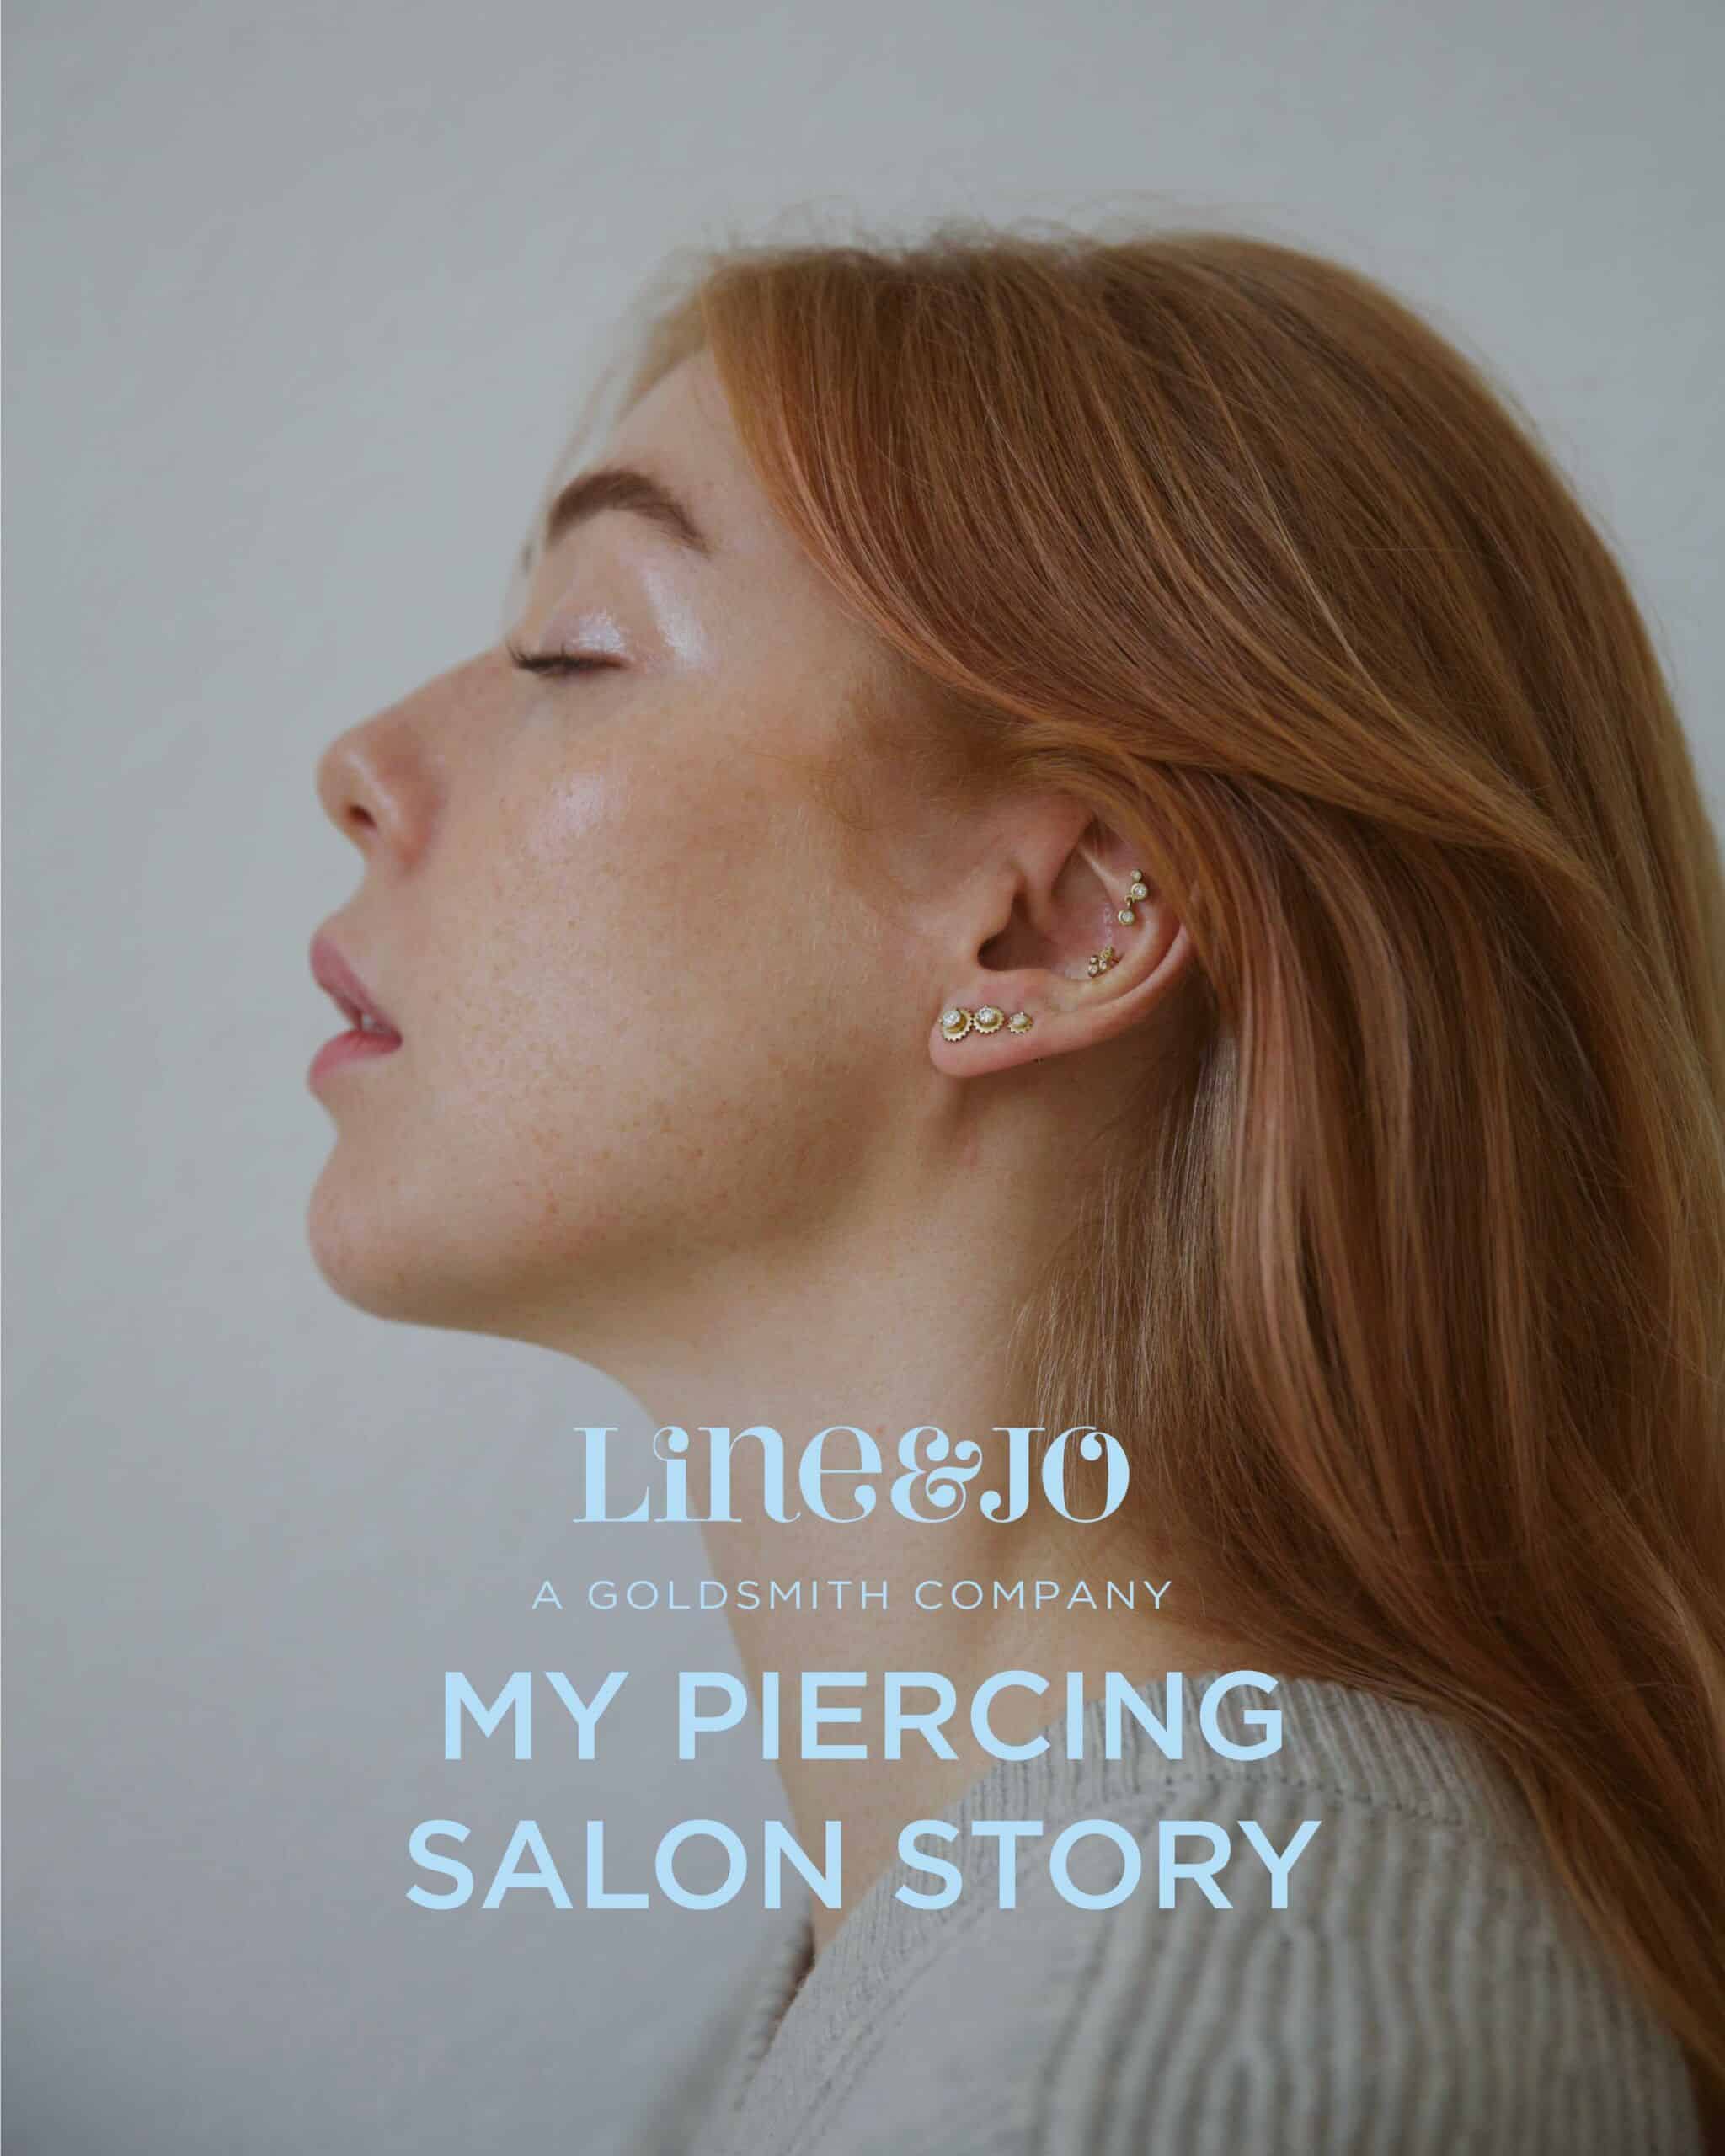 My piercing salon story: Maria Jernov